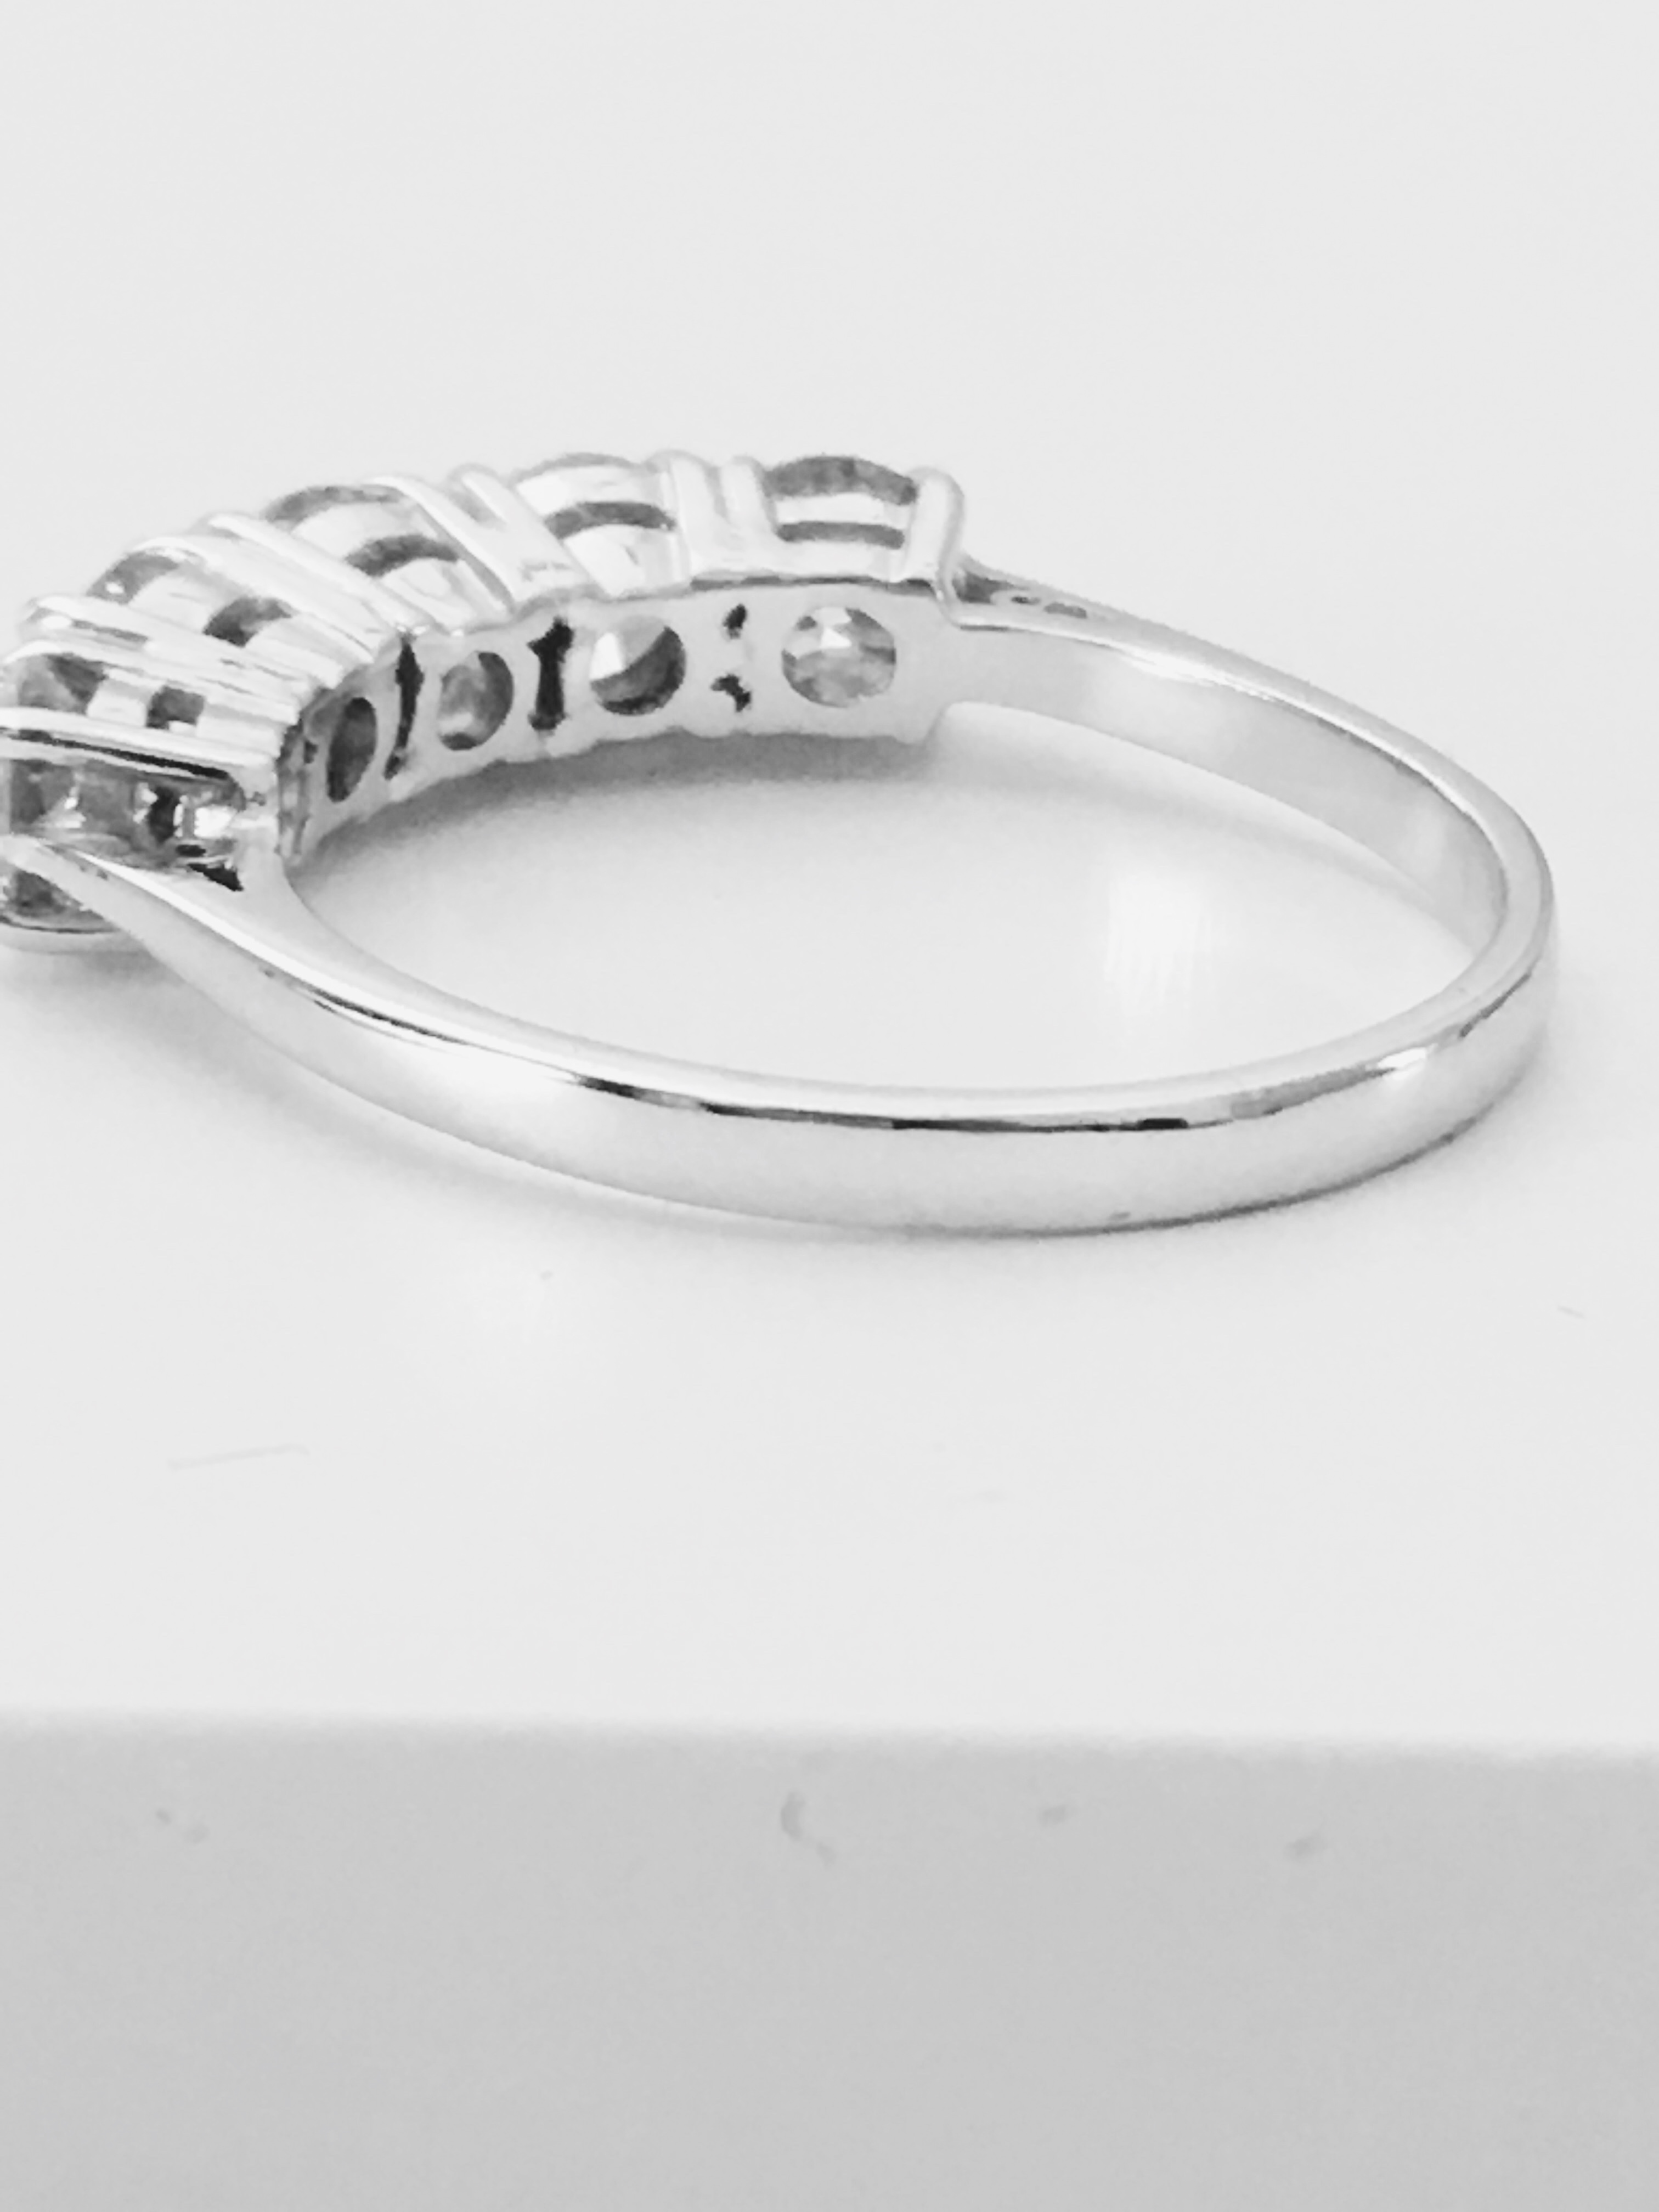 2.10ct diamon dfive stone Ring set in Platinum - Image 3 of 7